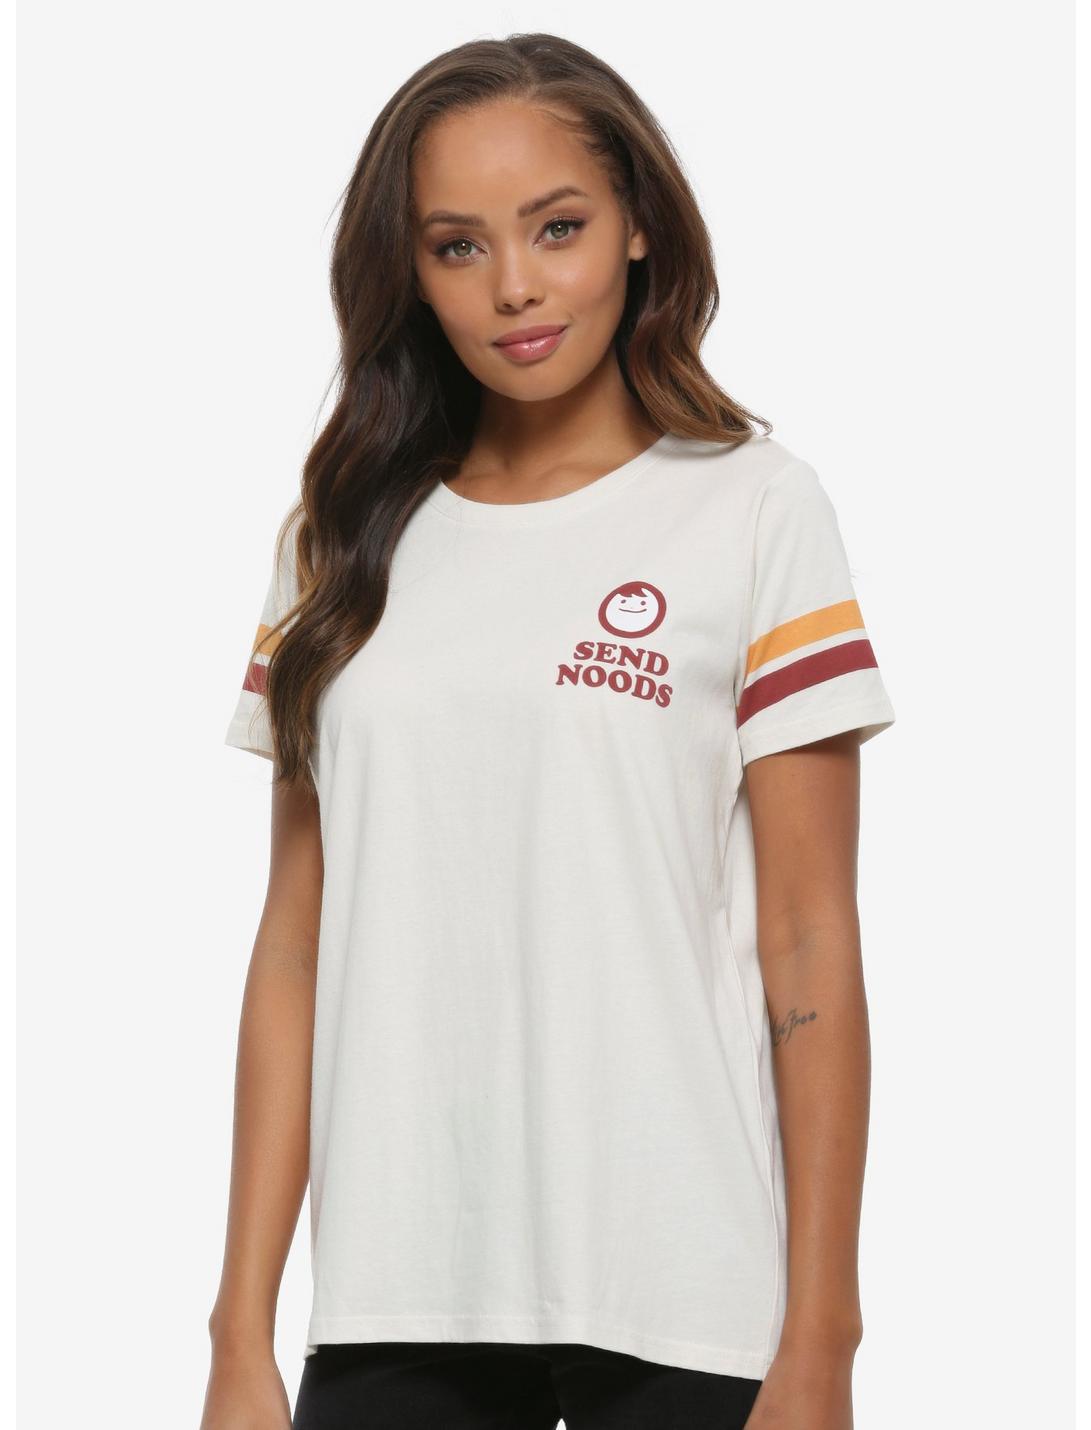 Maruchan Ramen Send Noods Women's T-Shirt - BoxLunch Exclusive, NATURAL, hi-res